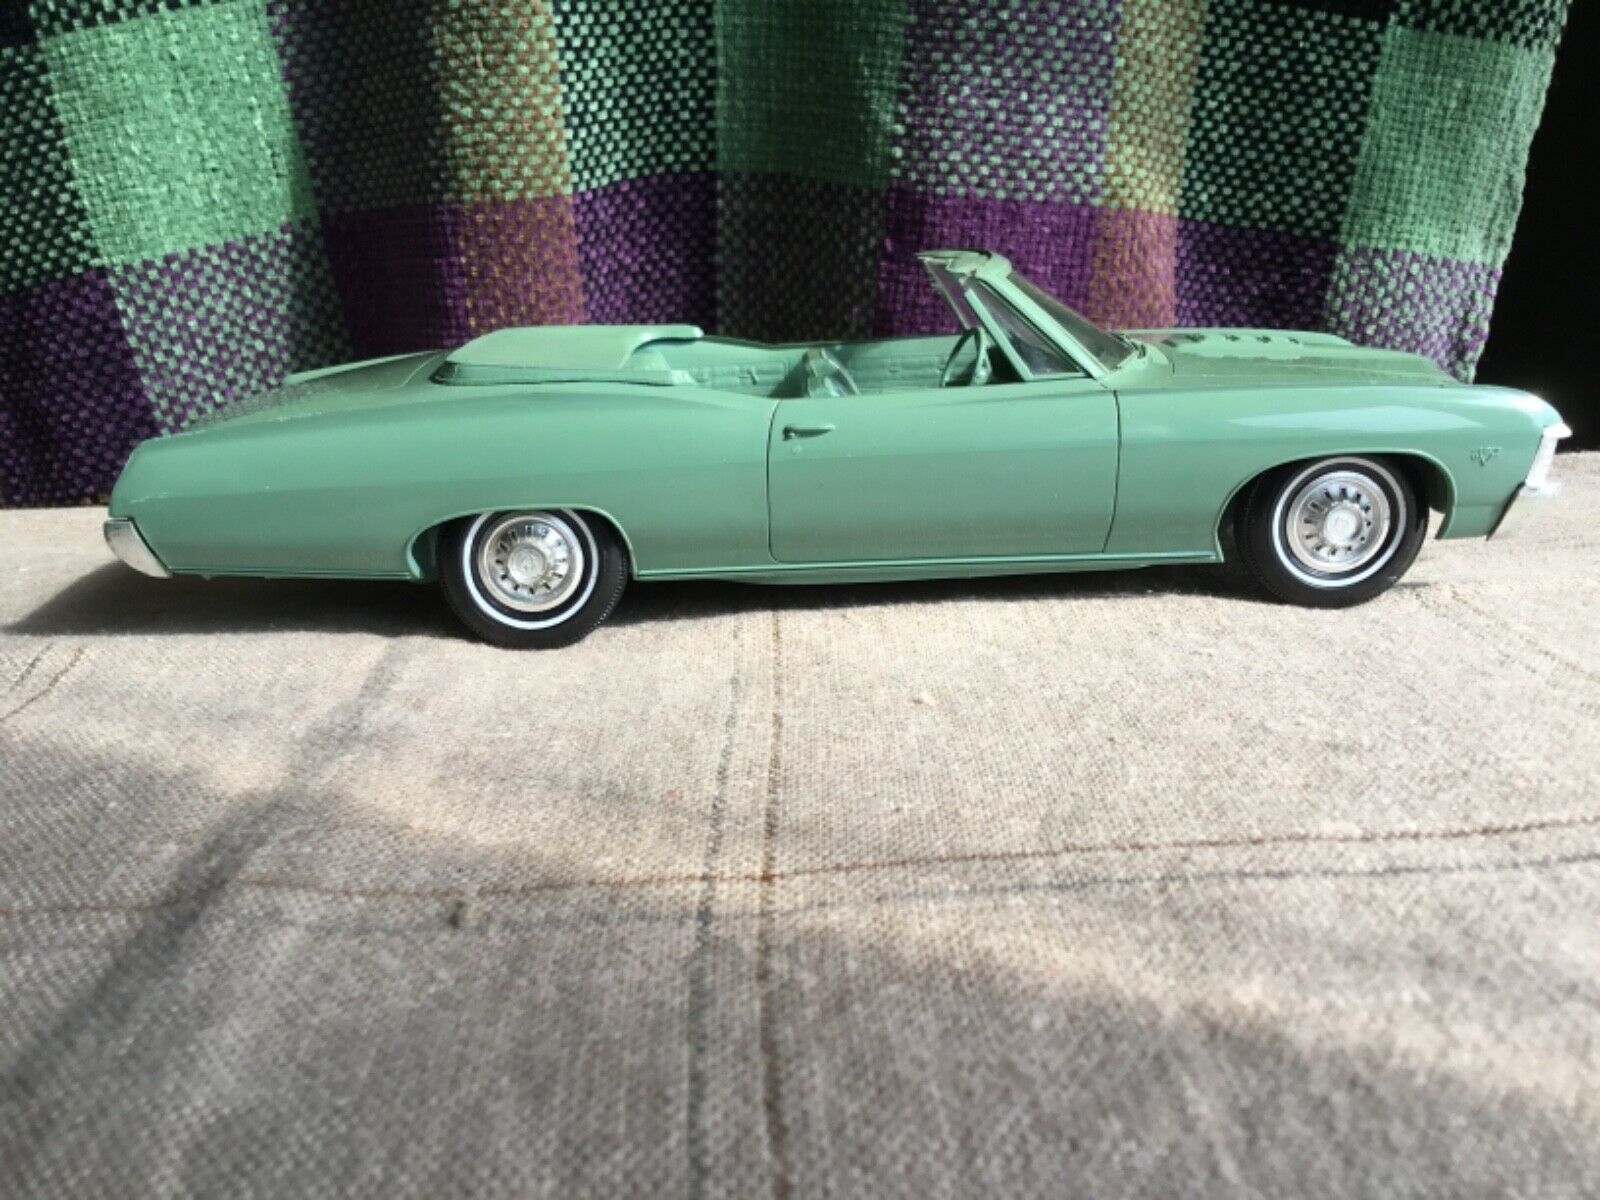 Vintage 1967 Chevy Impala Convertible Promo Car